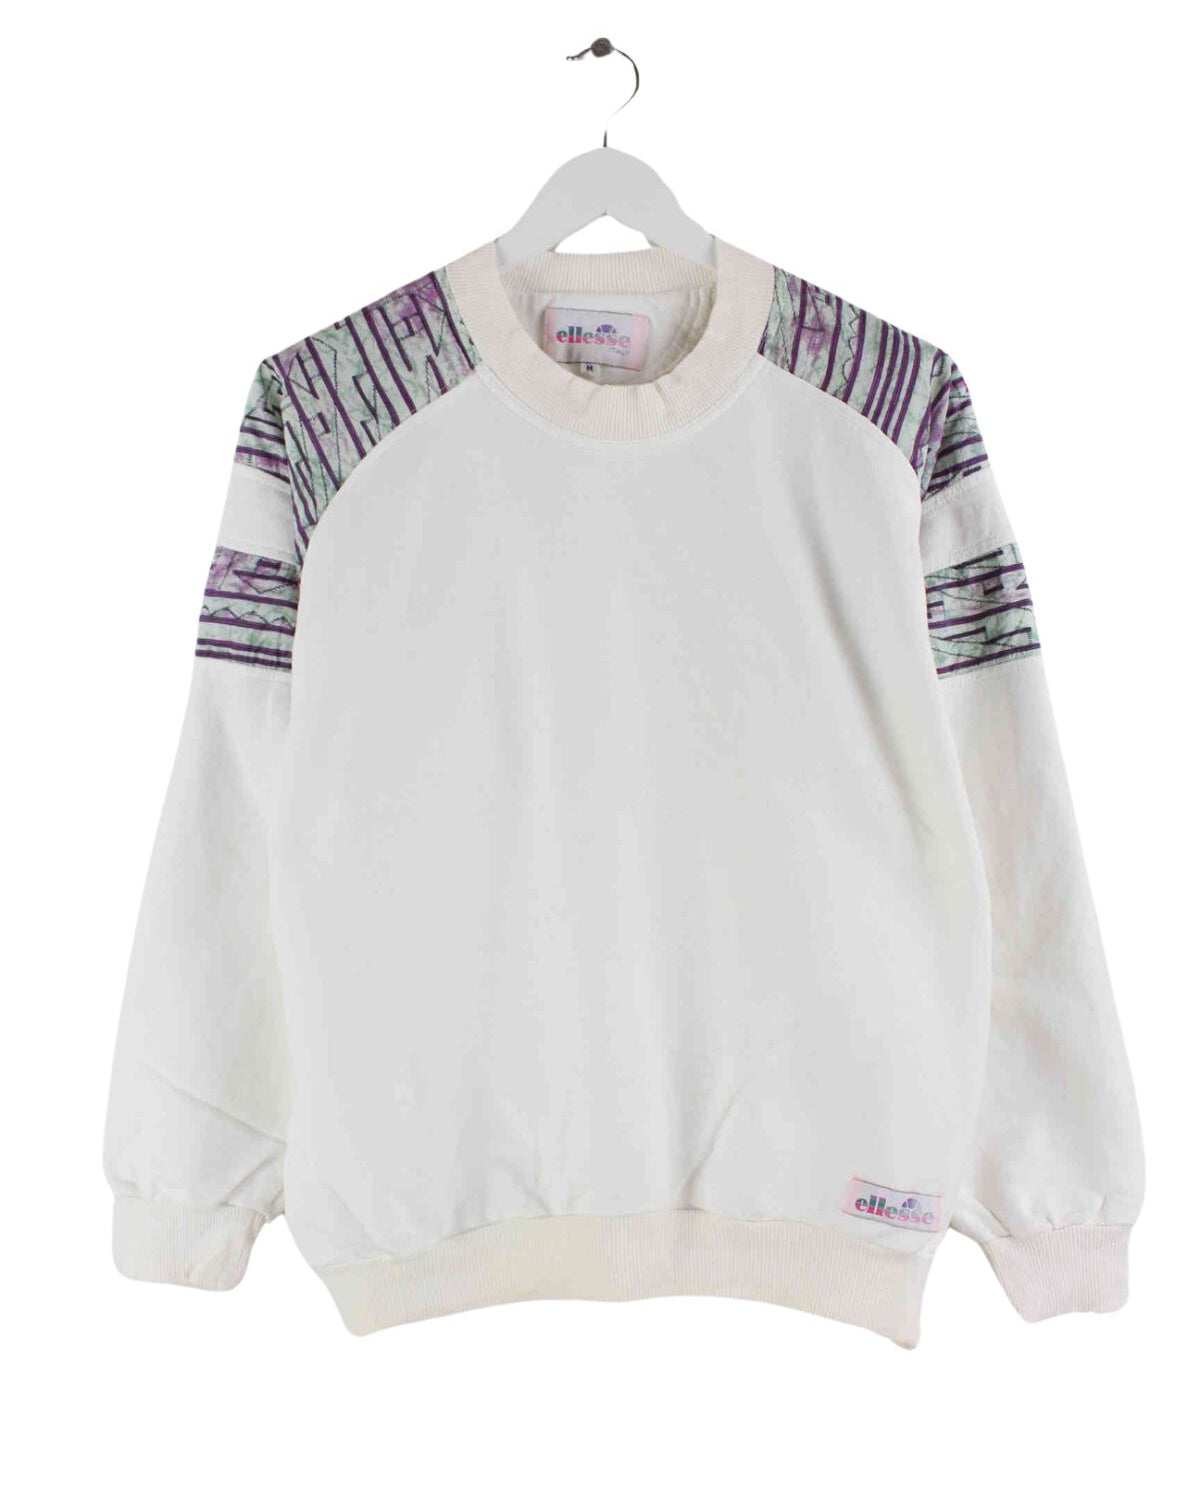 Ellesse Damen 90s Vintage Pattern Sweater Weiß S (front image)